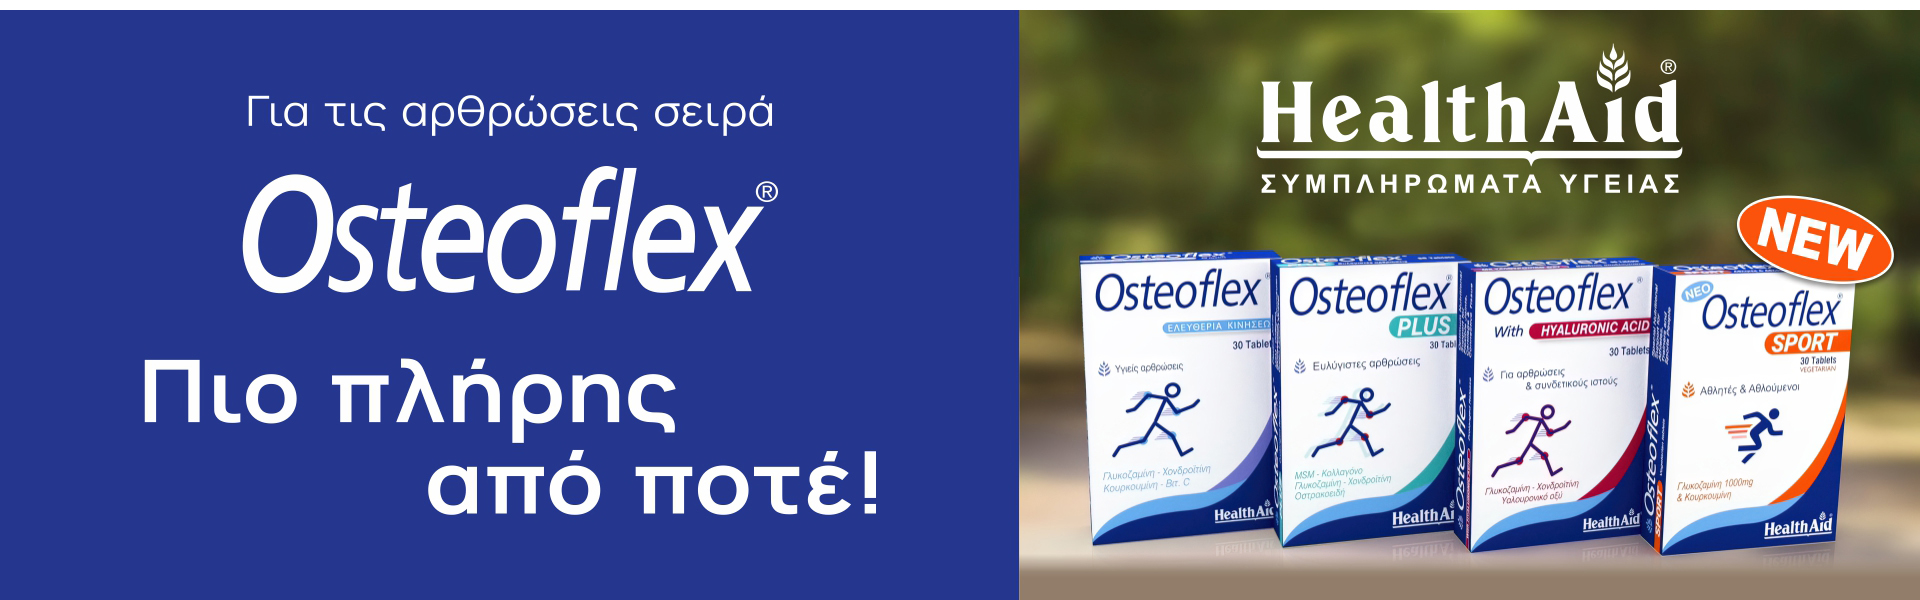 Health Aid - Osteoflex